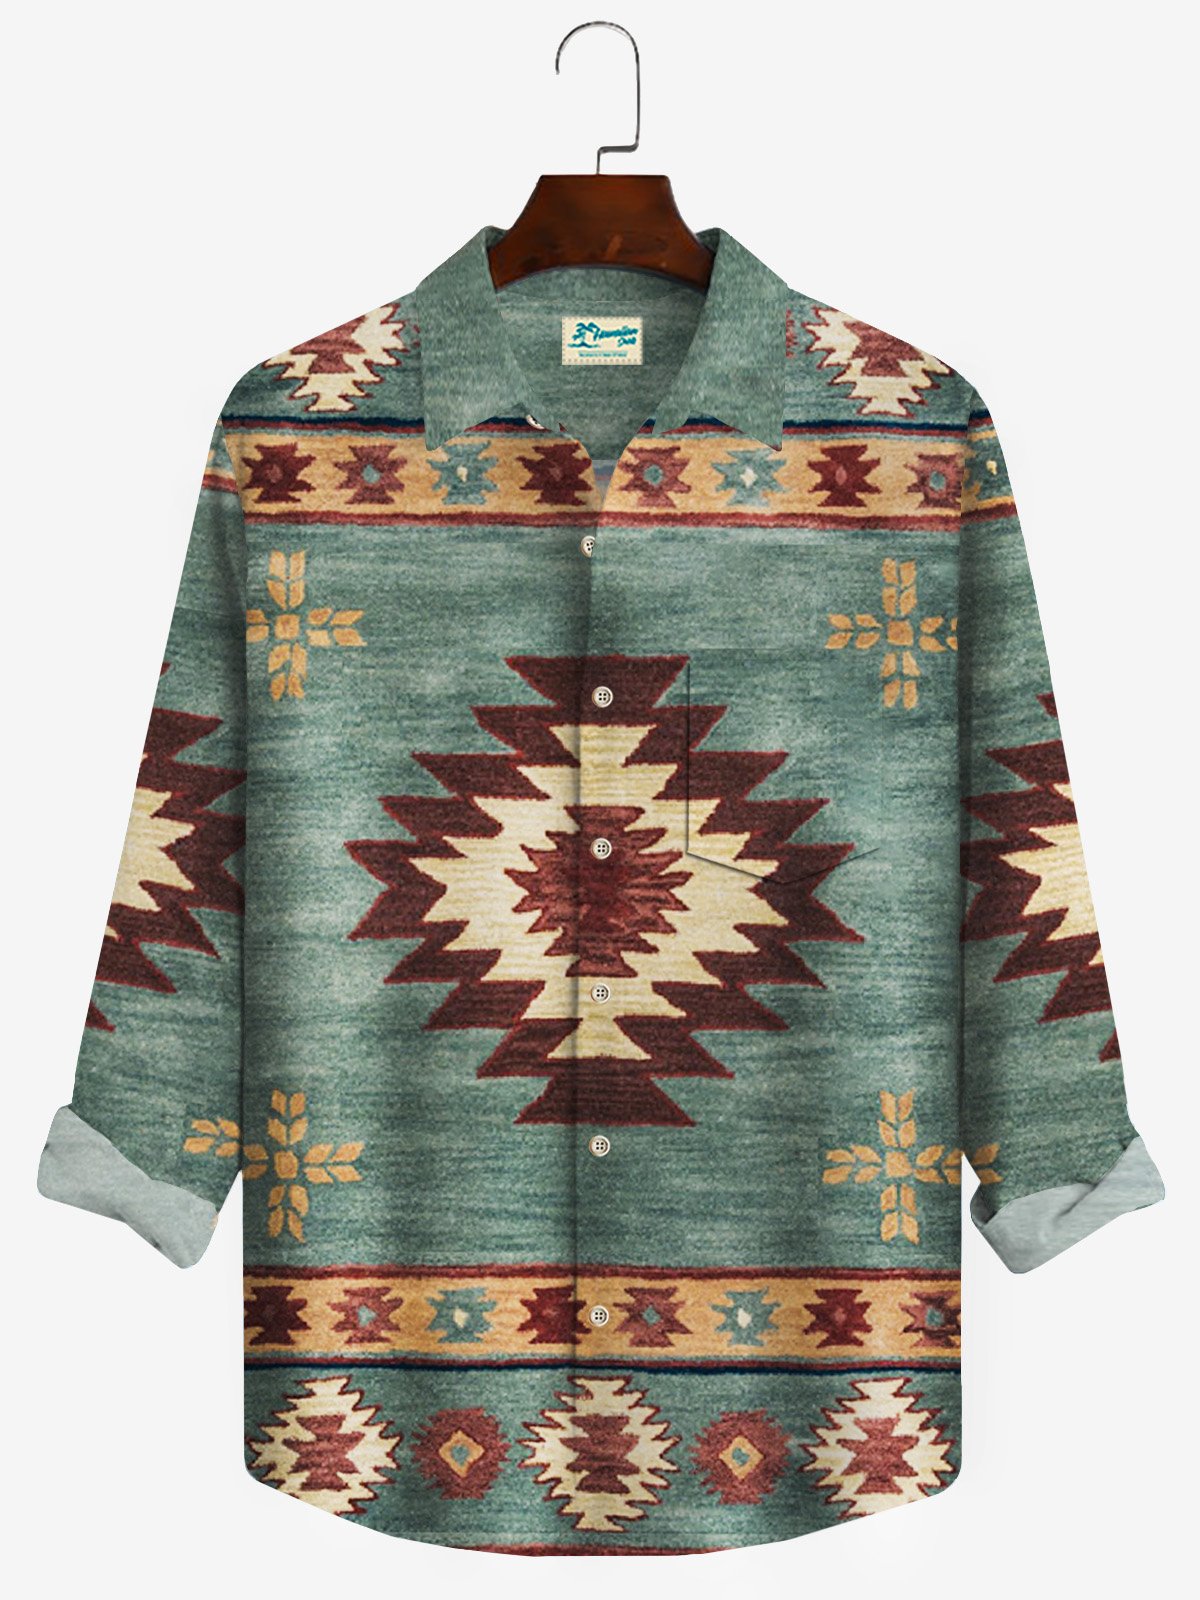 Royaura Vintage Aztec Geometric Art Men's Casual Long Sleeve Shirt Warm Ethnic Totem Plus Size Camp Pocket Shirts